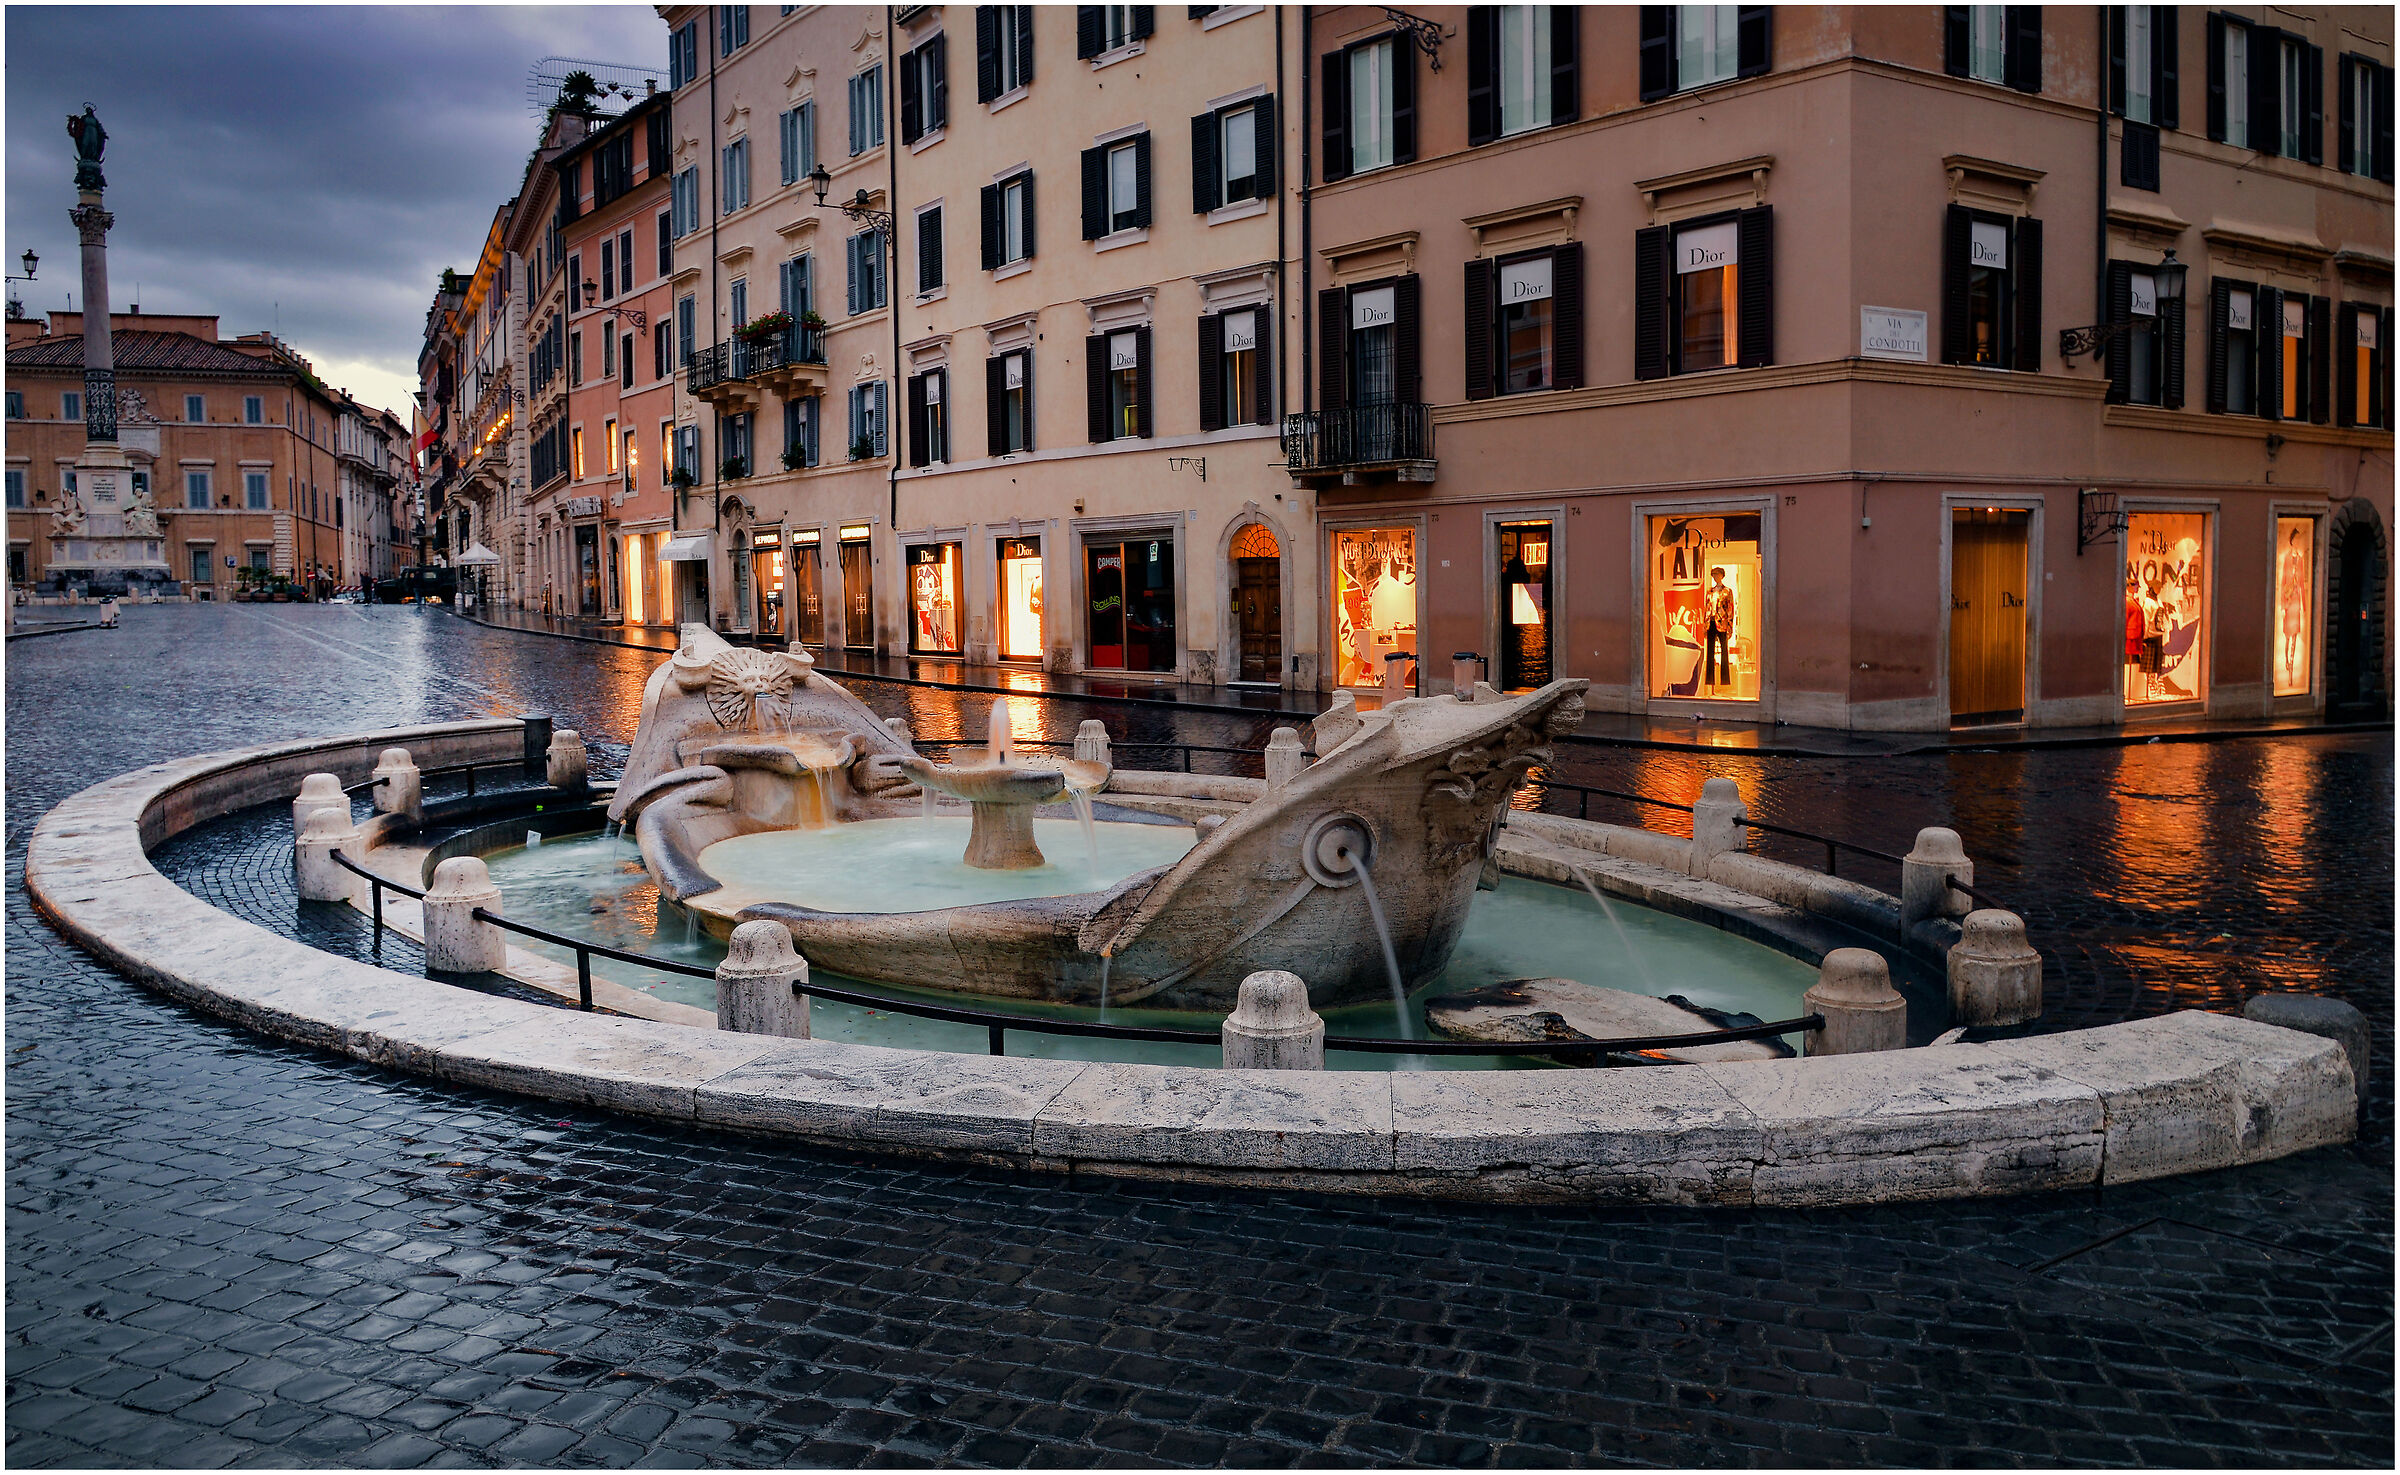 The Fountain of the Barcaccia ...